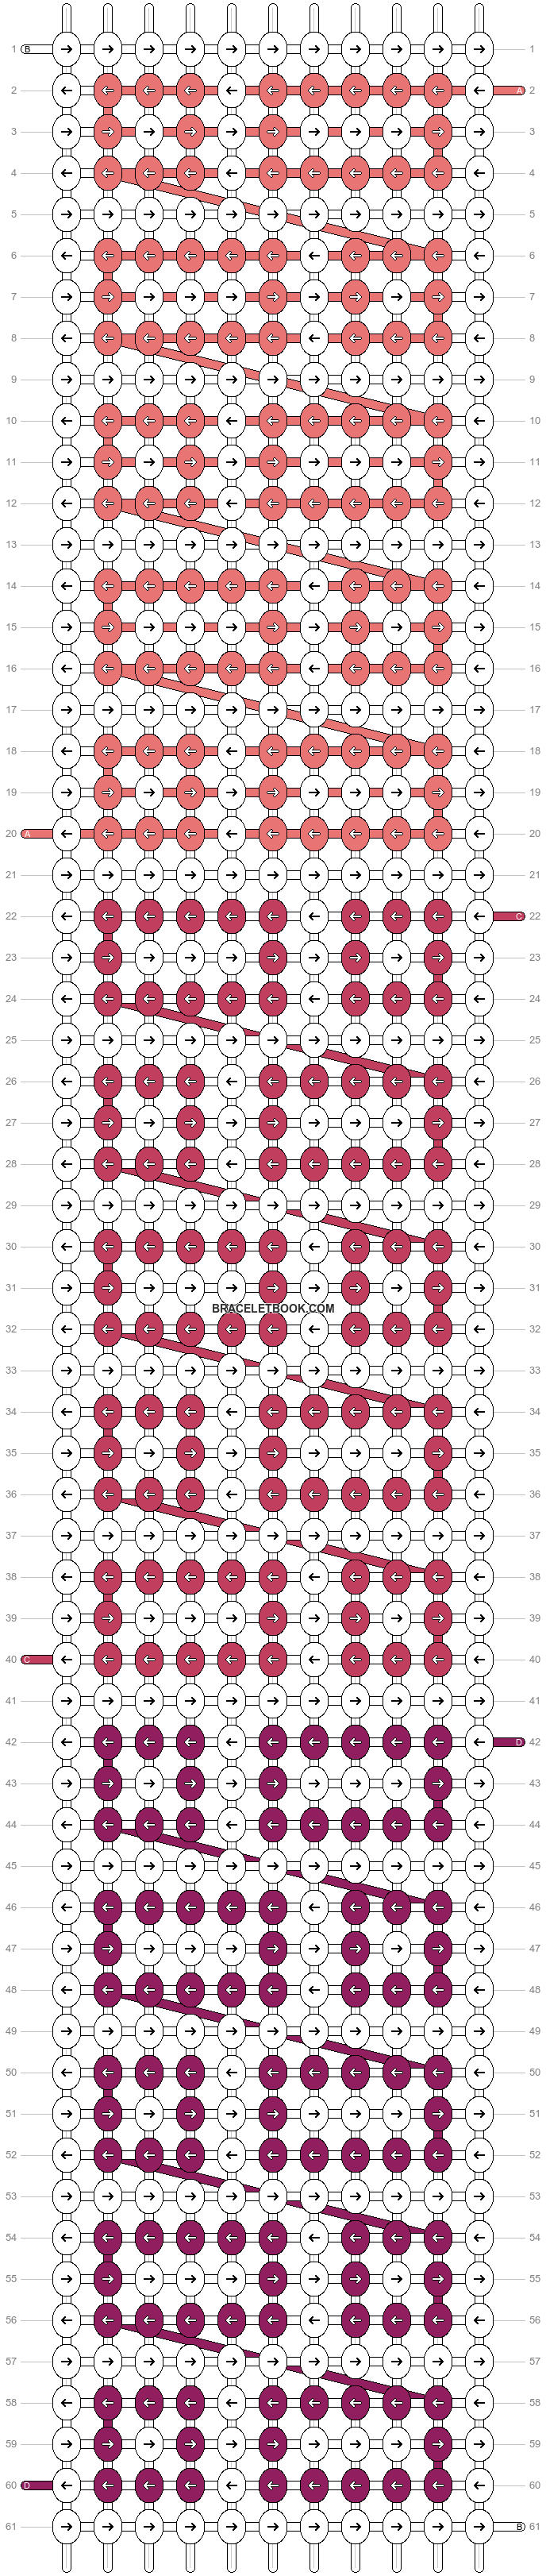 Alpha pattern #54067 variation #91300 pattern